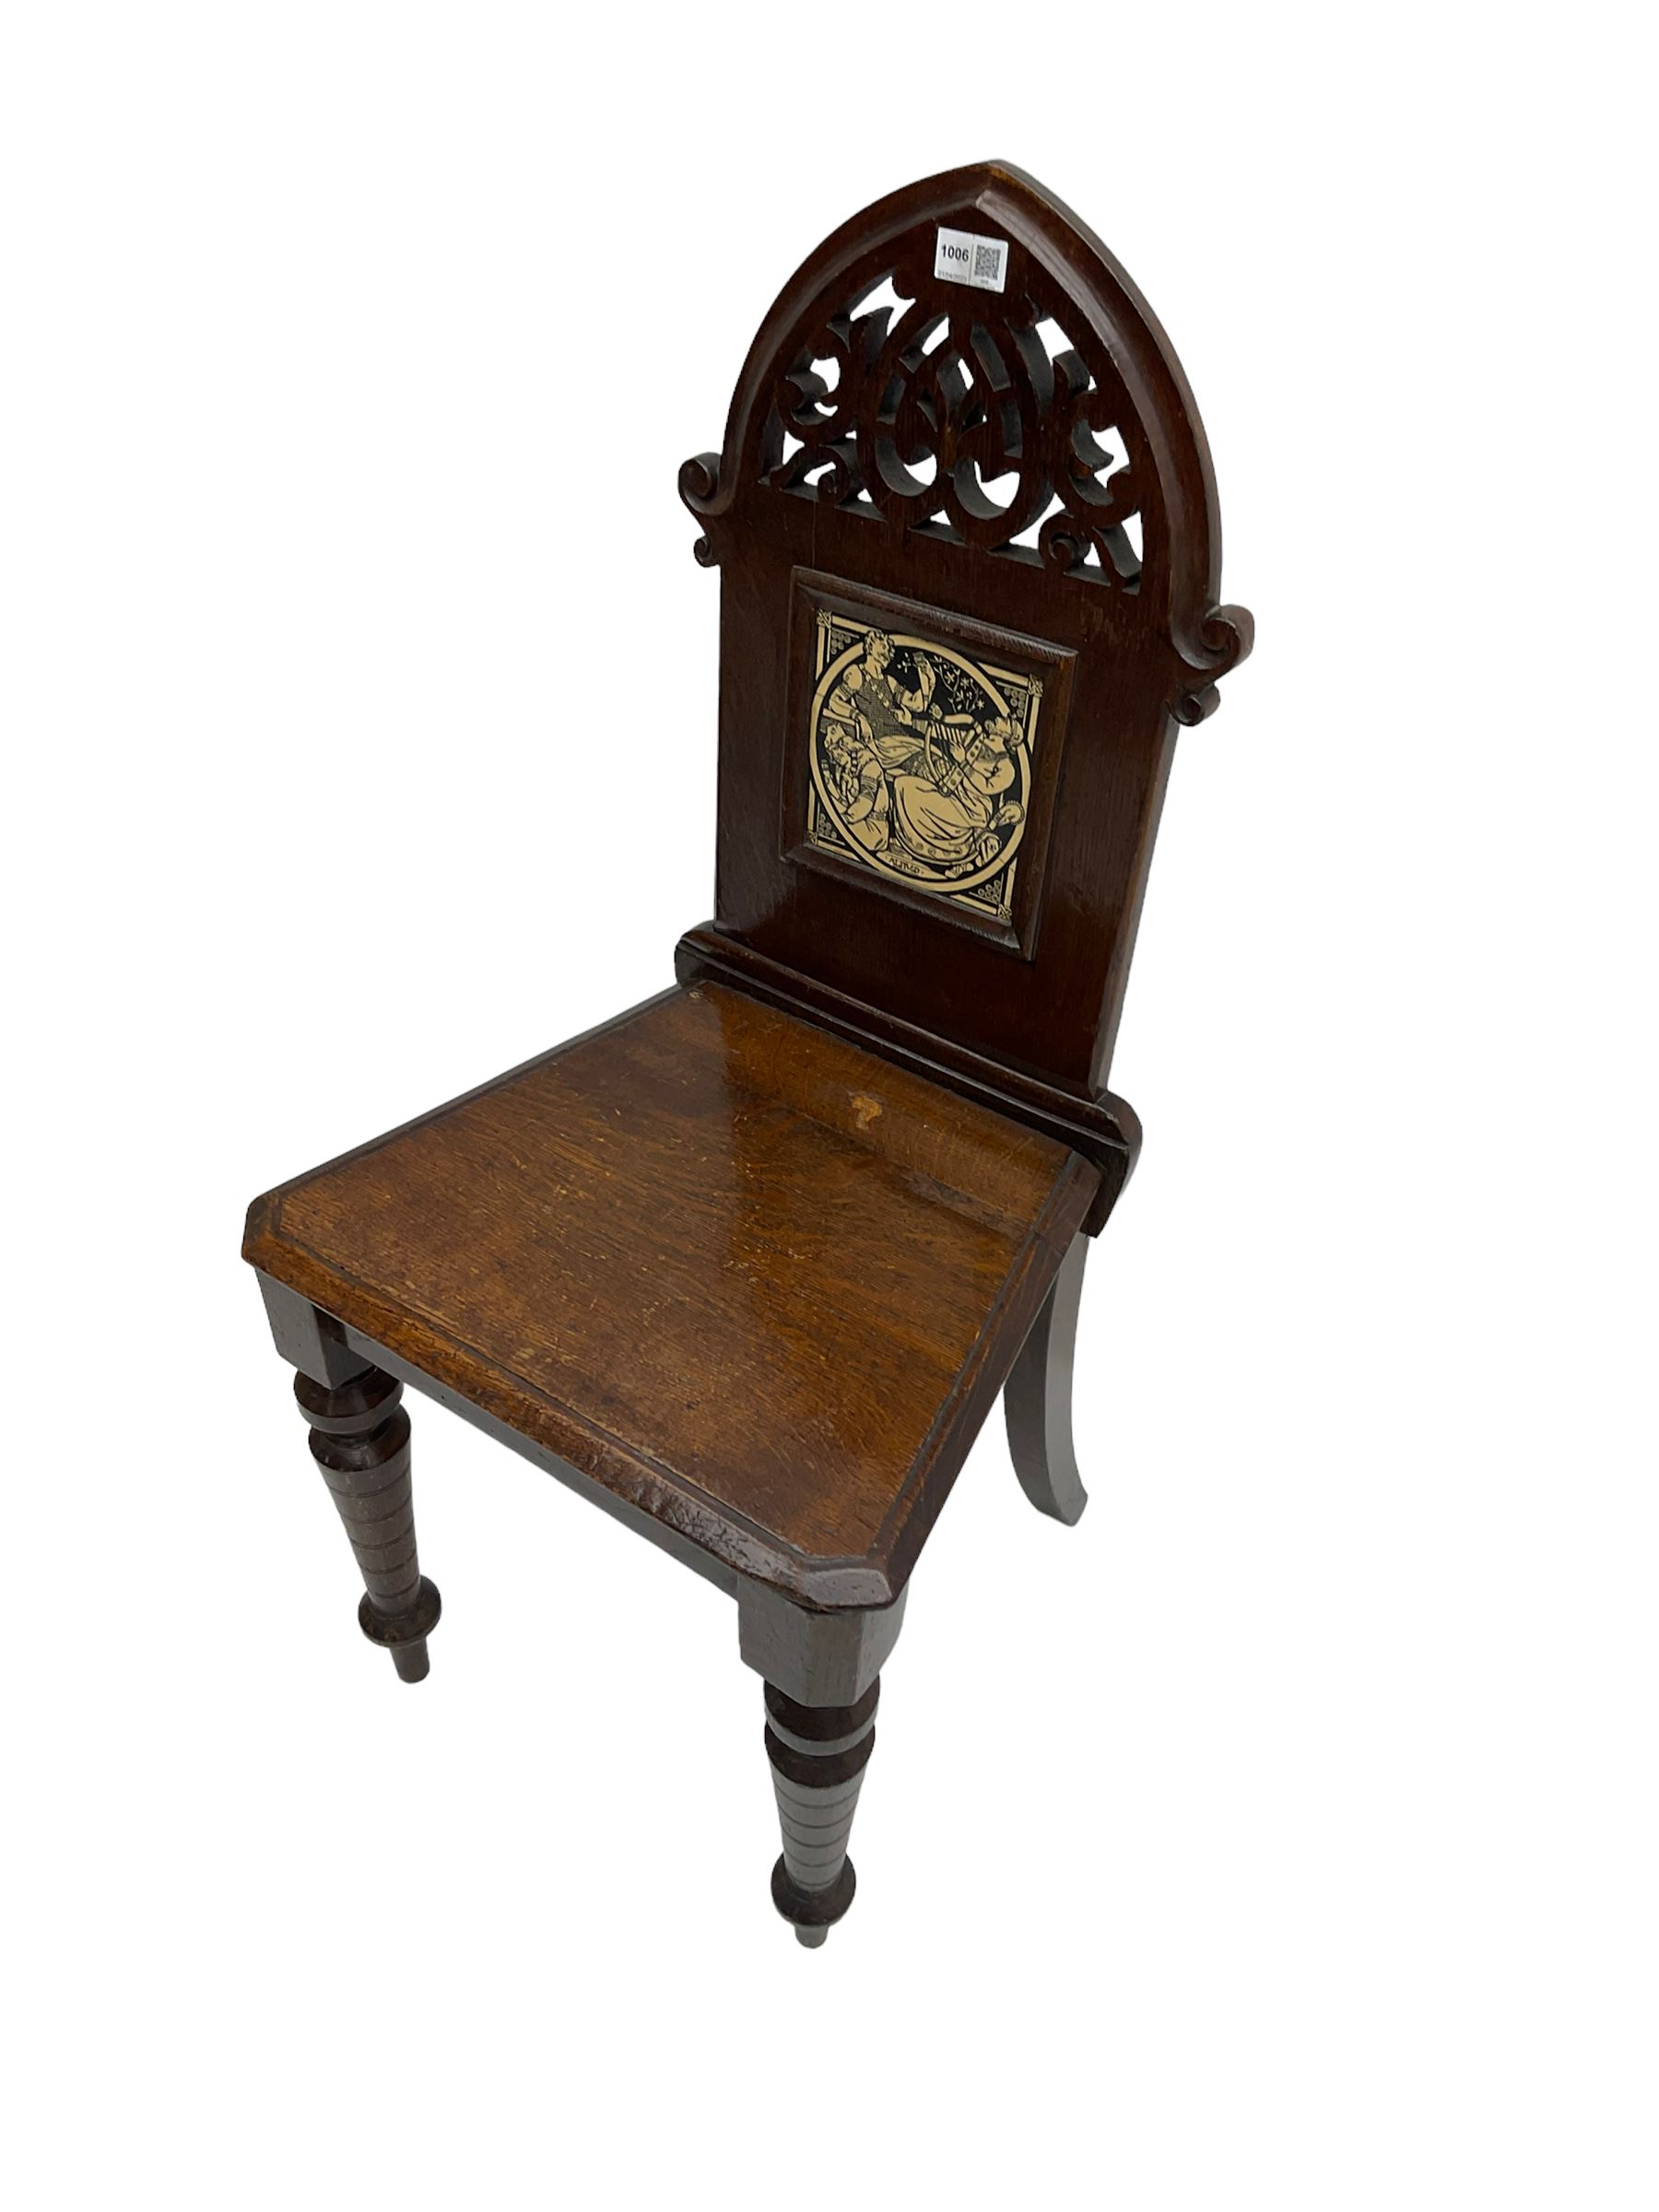 19th century oak hall chair - Image 6 of 6